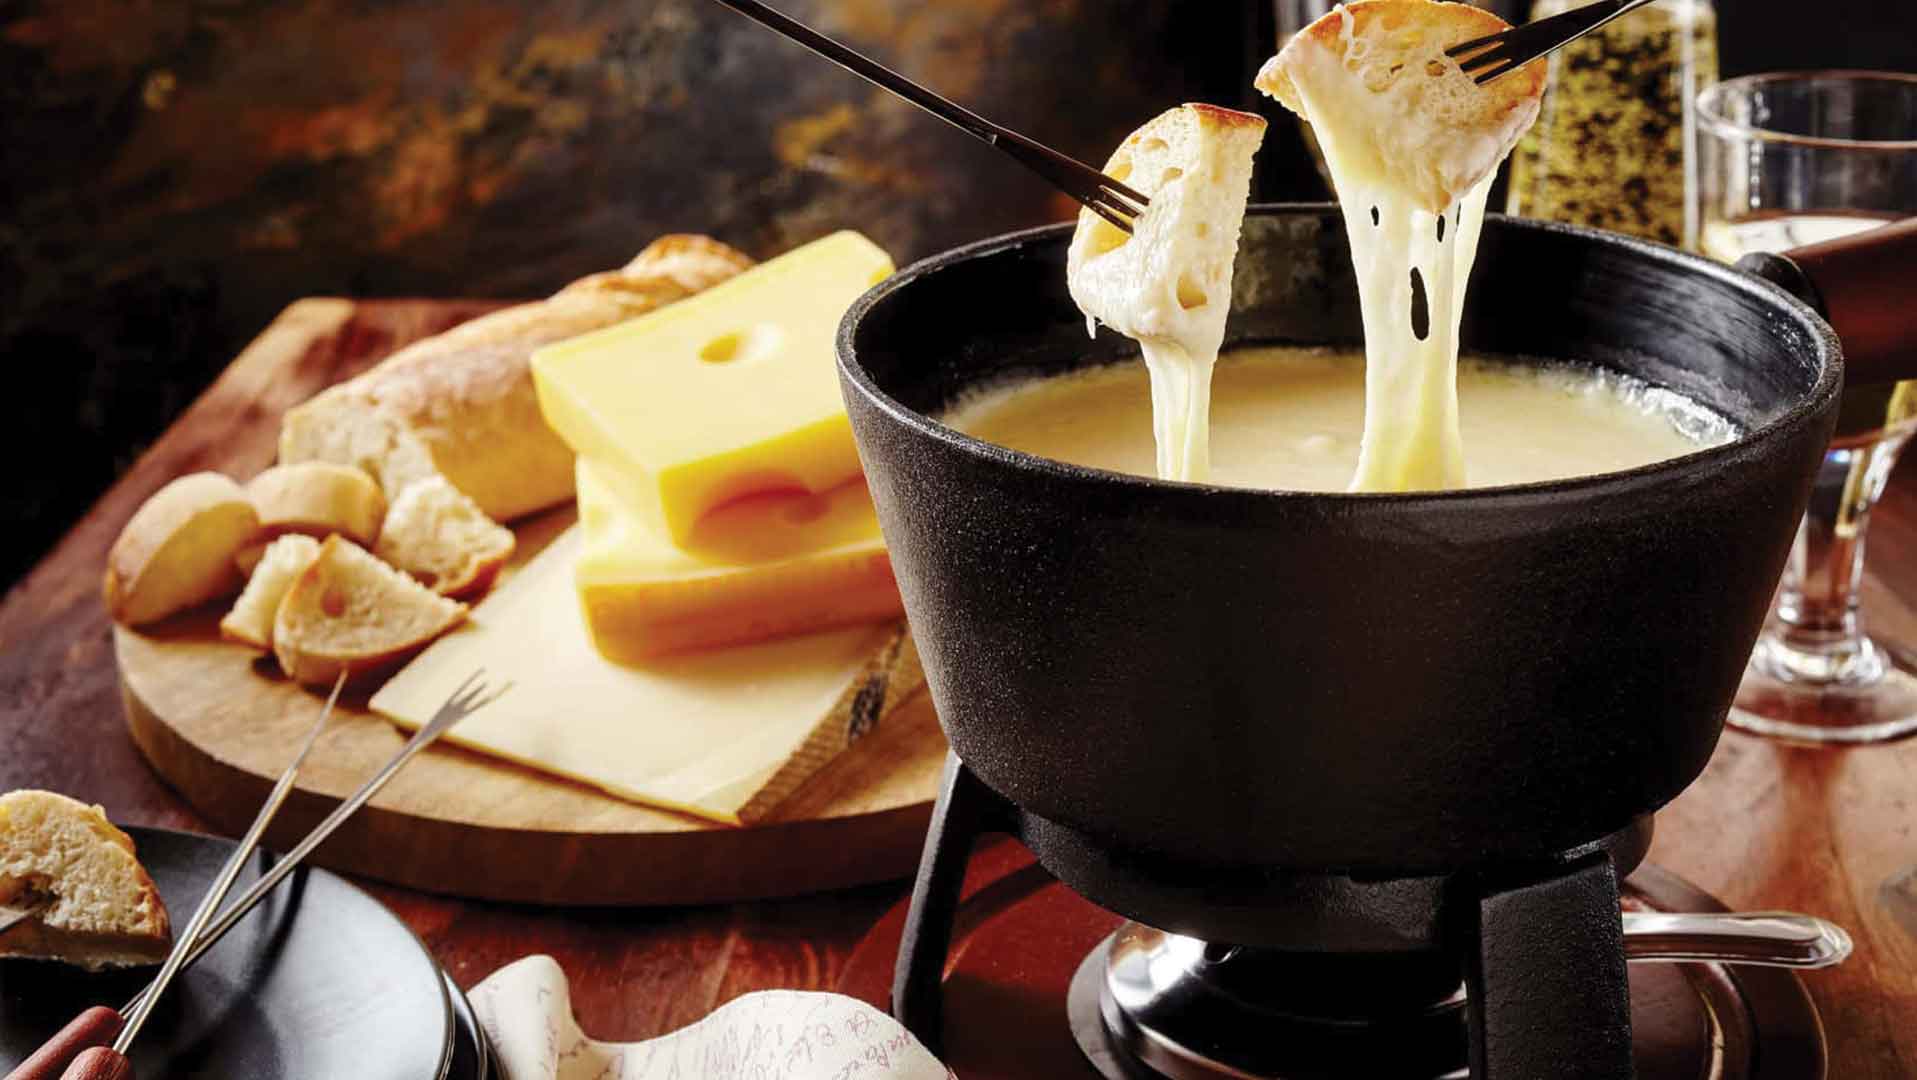 Caquelon pour fondue : l'ustensile 100% tradition